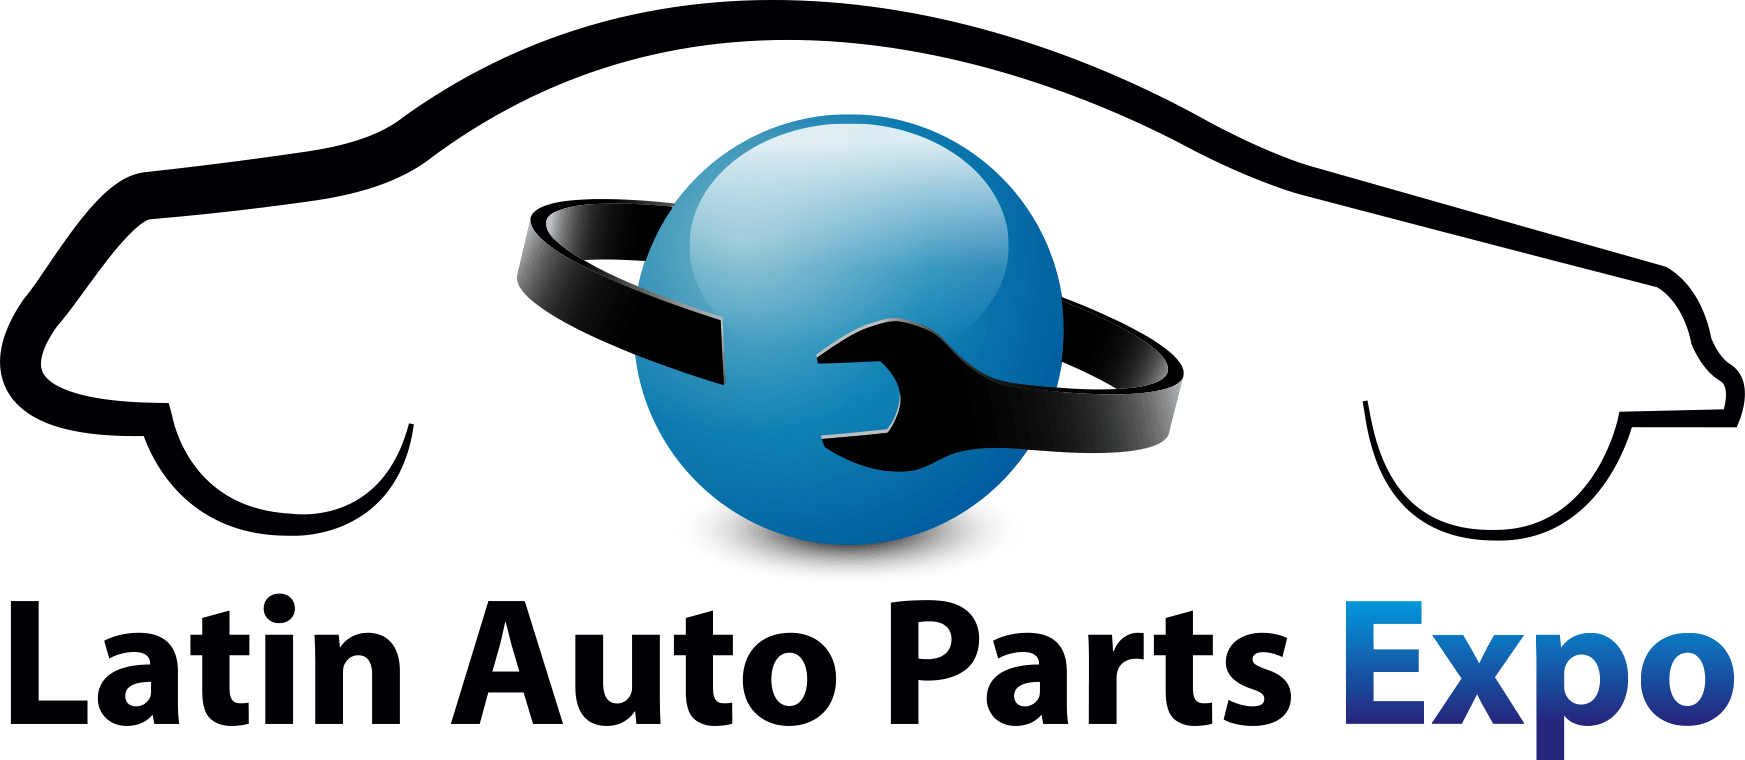 Automotive Parts Manufacturer Logo - Latin Auto Parts Expo | 09/07/2014 – 11/07/2014 : Tyrepress